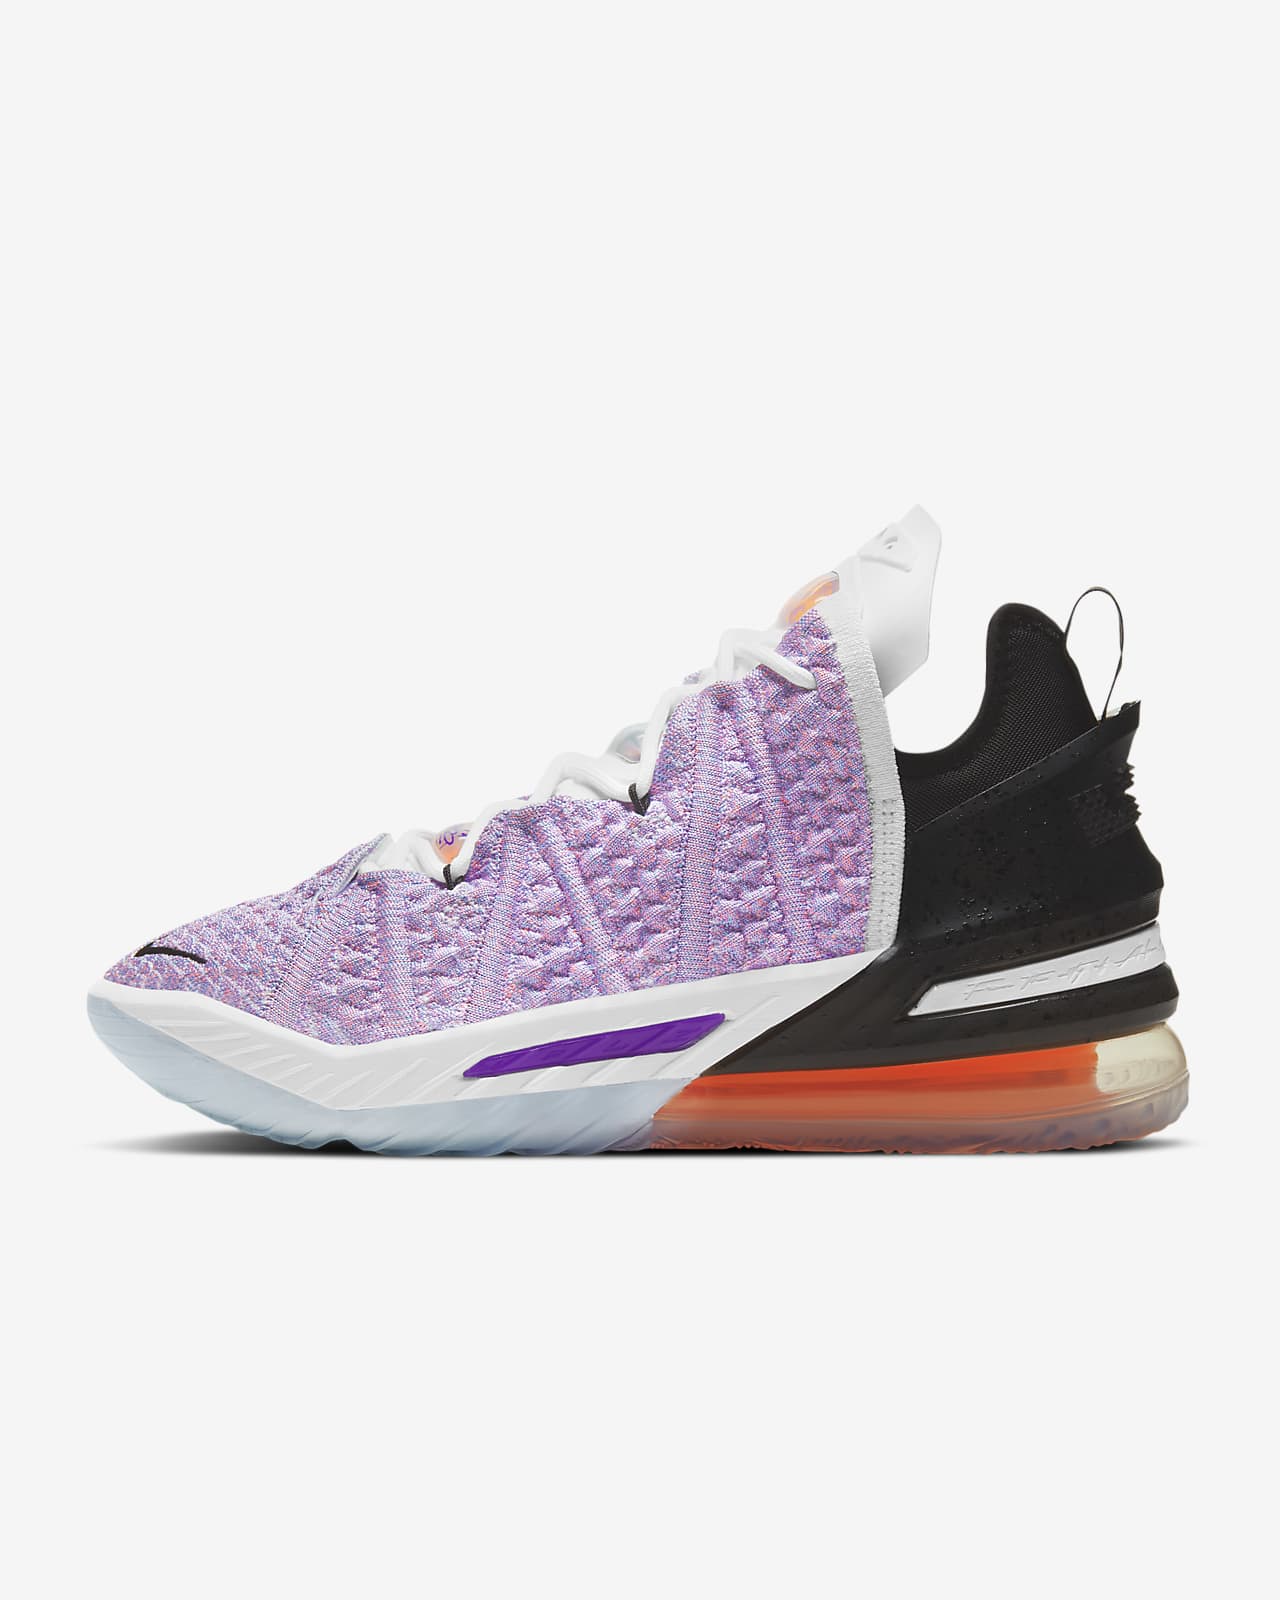  LeBron  18  Basketball Shoe Nike  MY